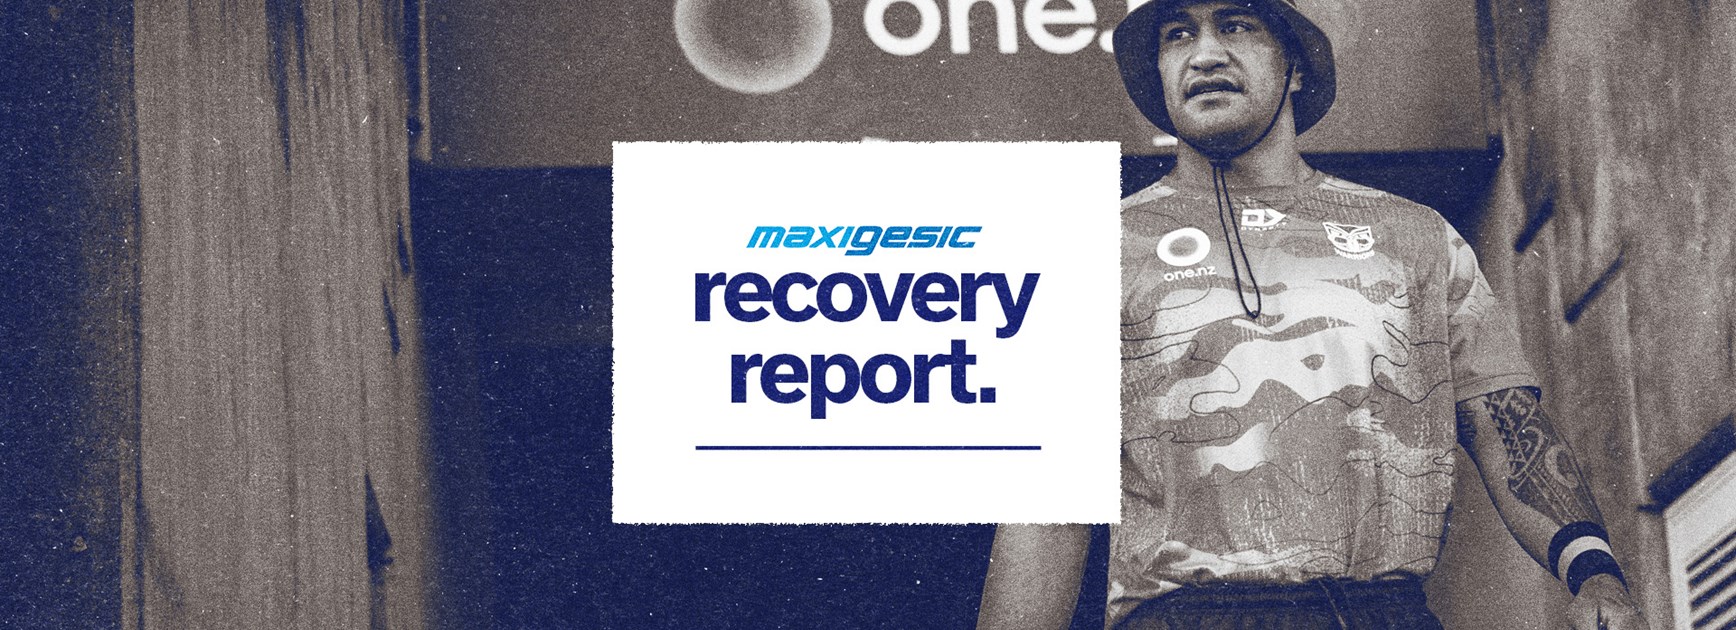 Maxigesic Recovery Report: Niukore progressing